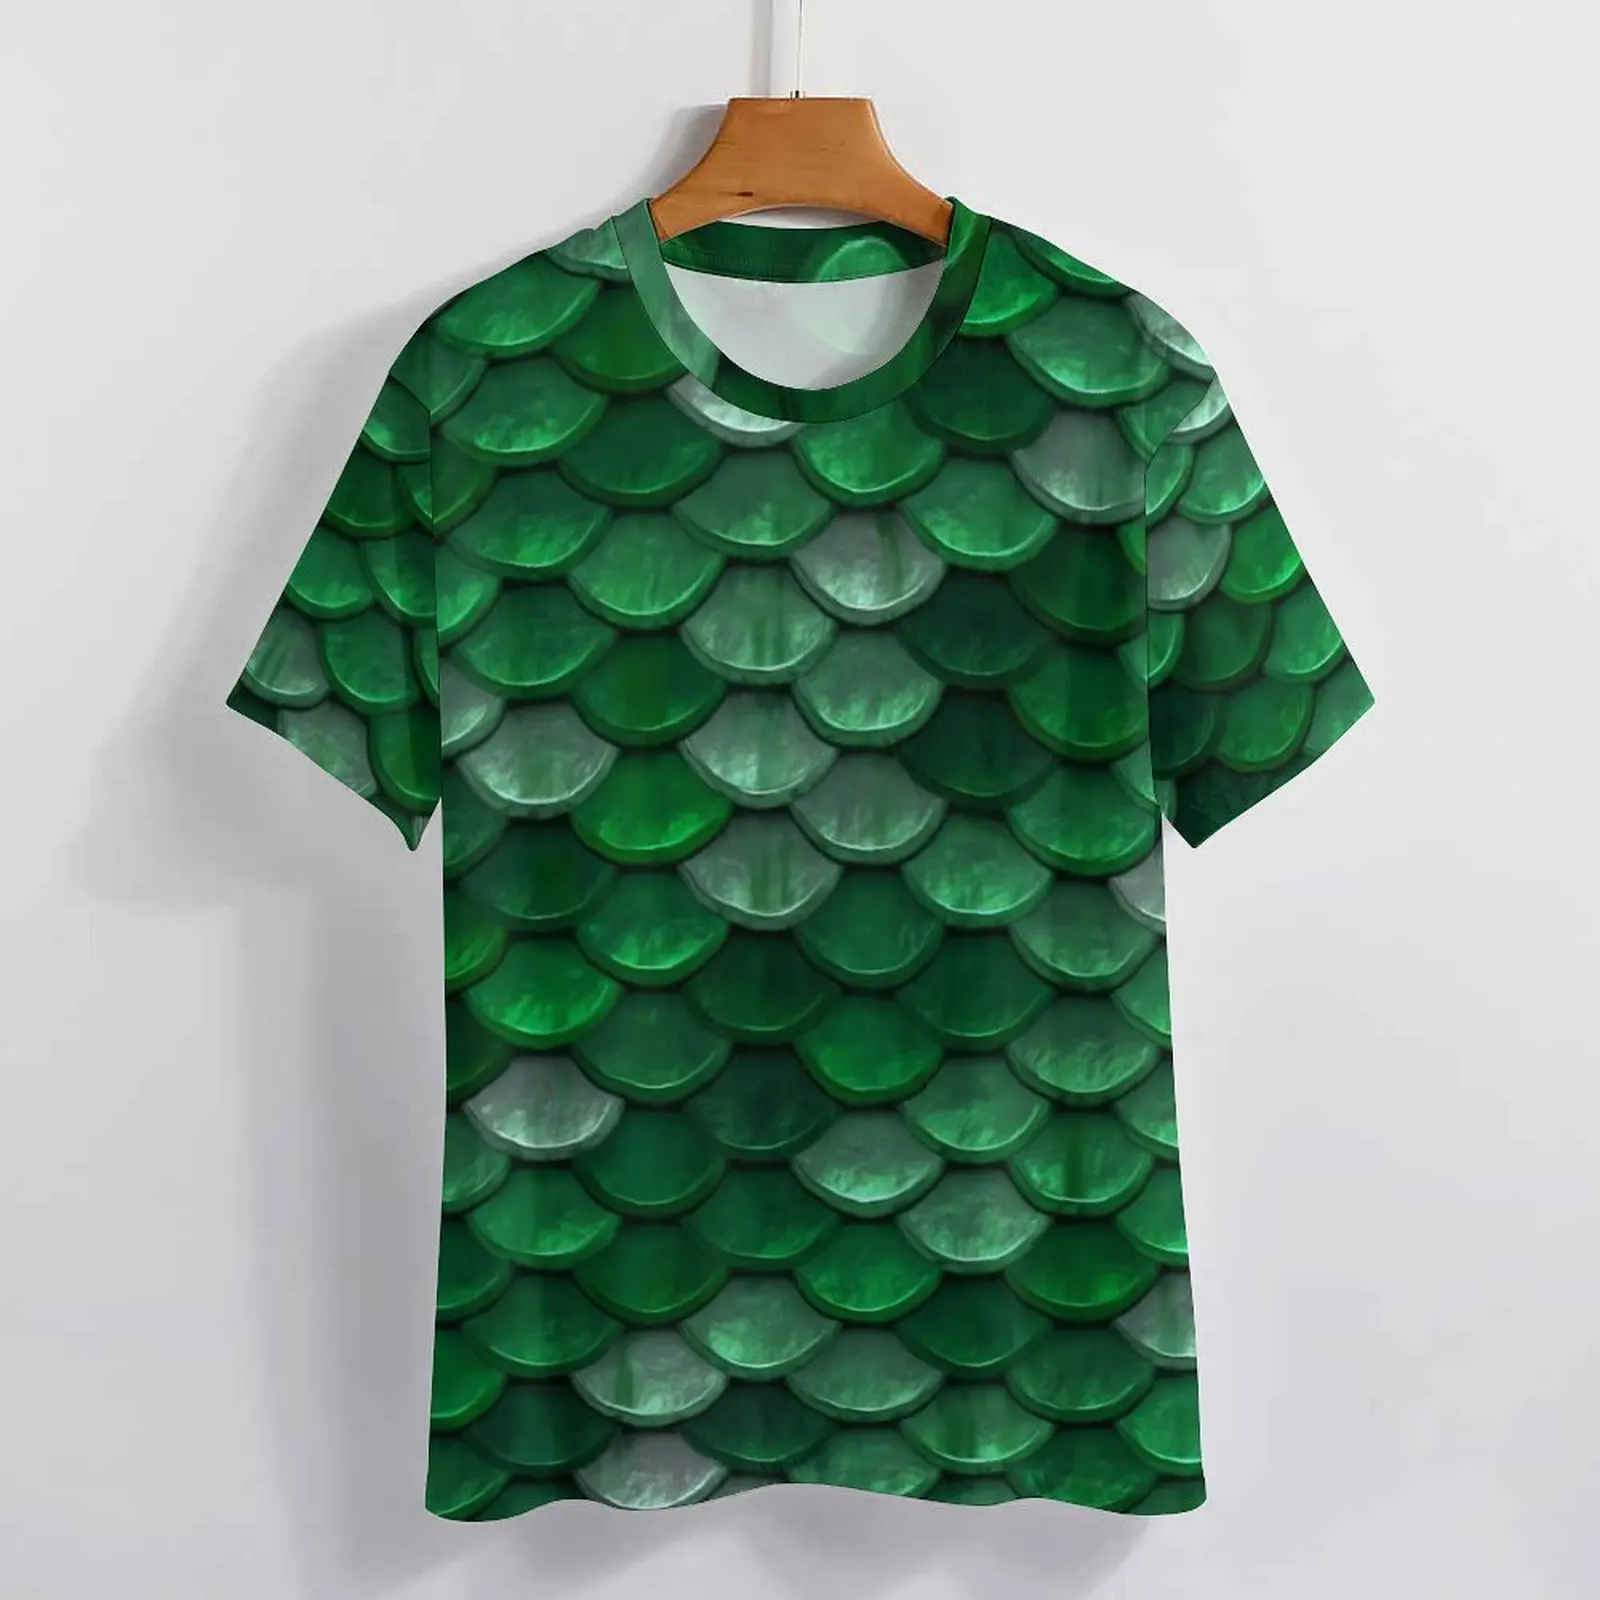 Green Mermaids T-Shirt Fish Scales Print Men Novelty T Shirts Original Graphic Tee Shirt Short-Sleeved Casual Tops Birthday Gift images - 6